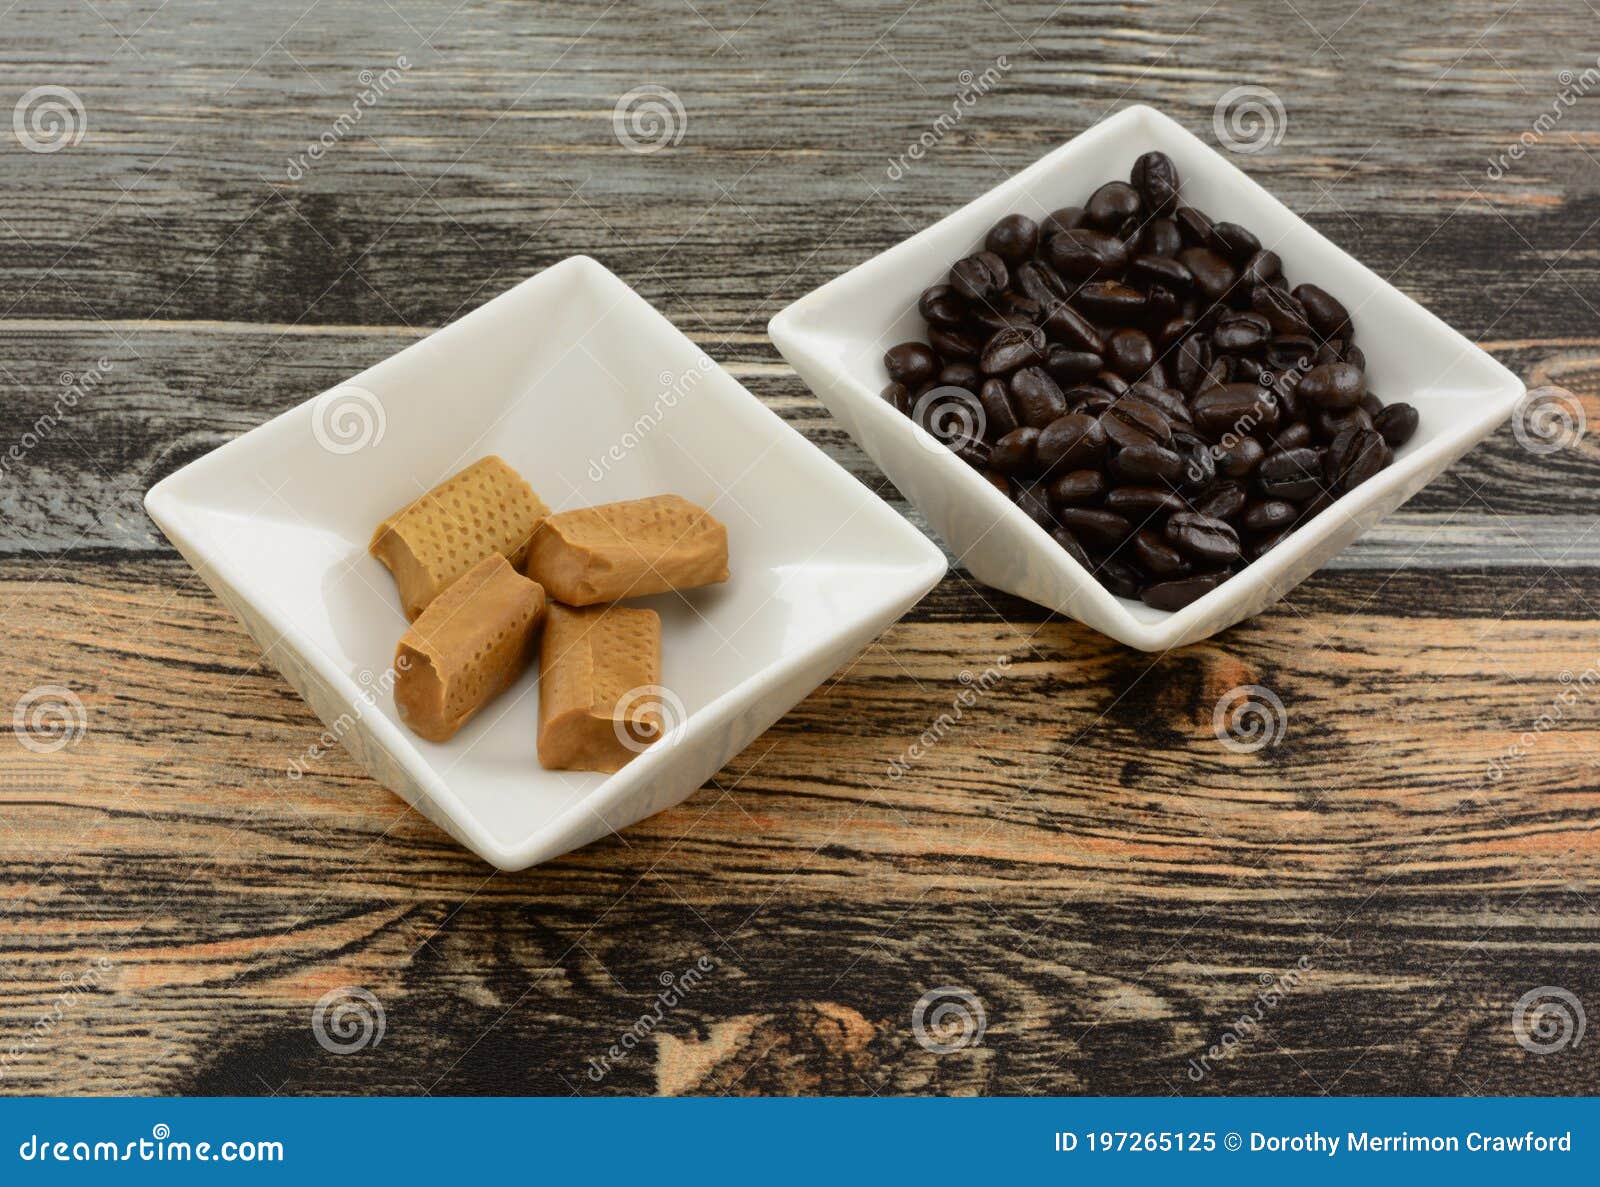 cafÃÂ© con leche toffee and coffee beans